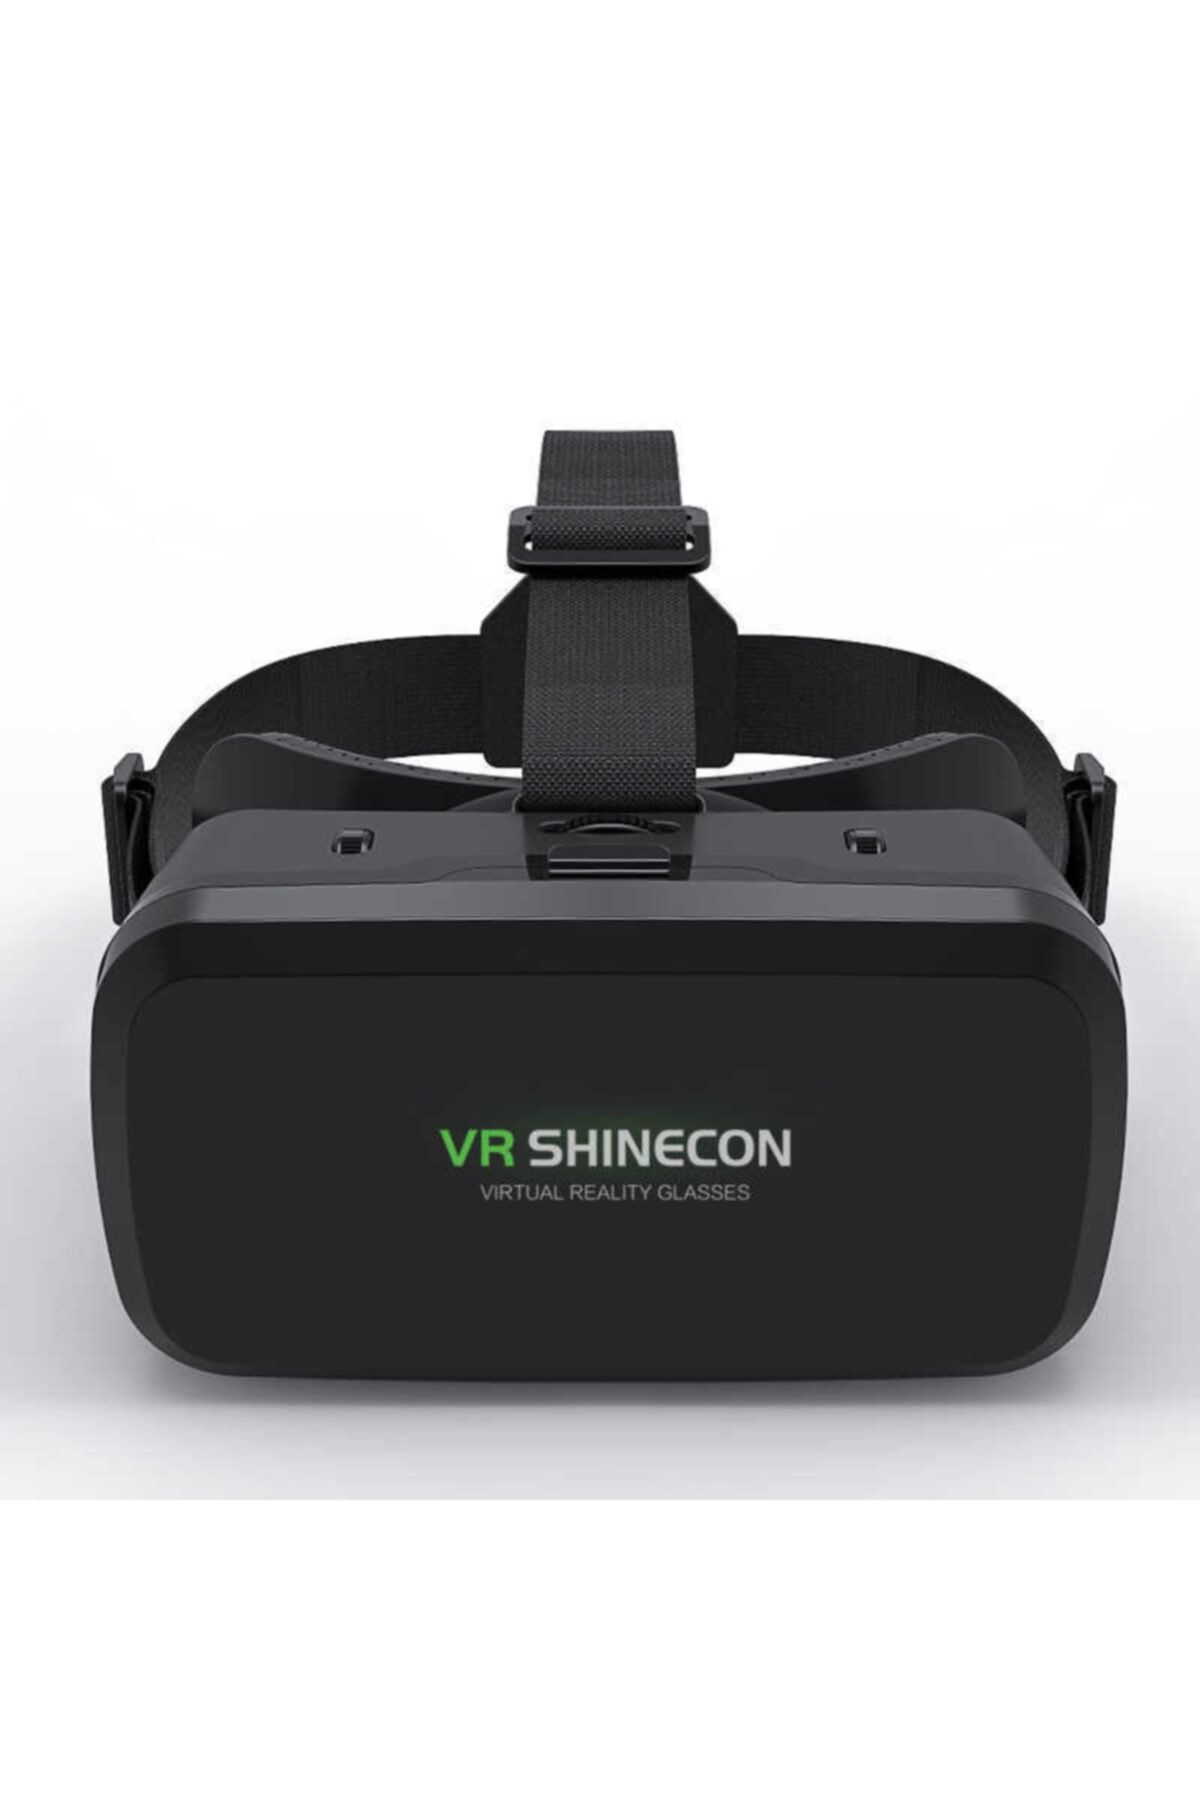 VR Shinecon G06a Reçine Lens 720° Panoramik 3d Stereo Sanal Gerçeklik Gözlüğü Metaverse Popsoket